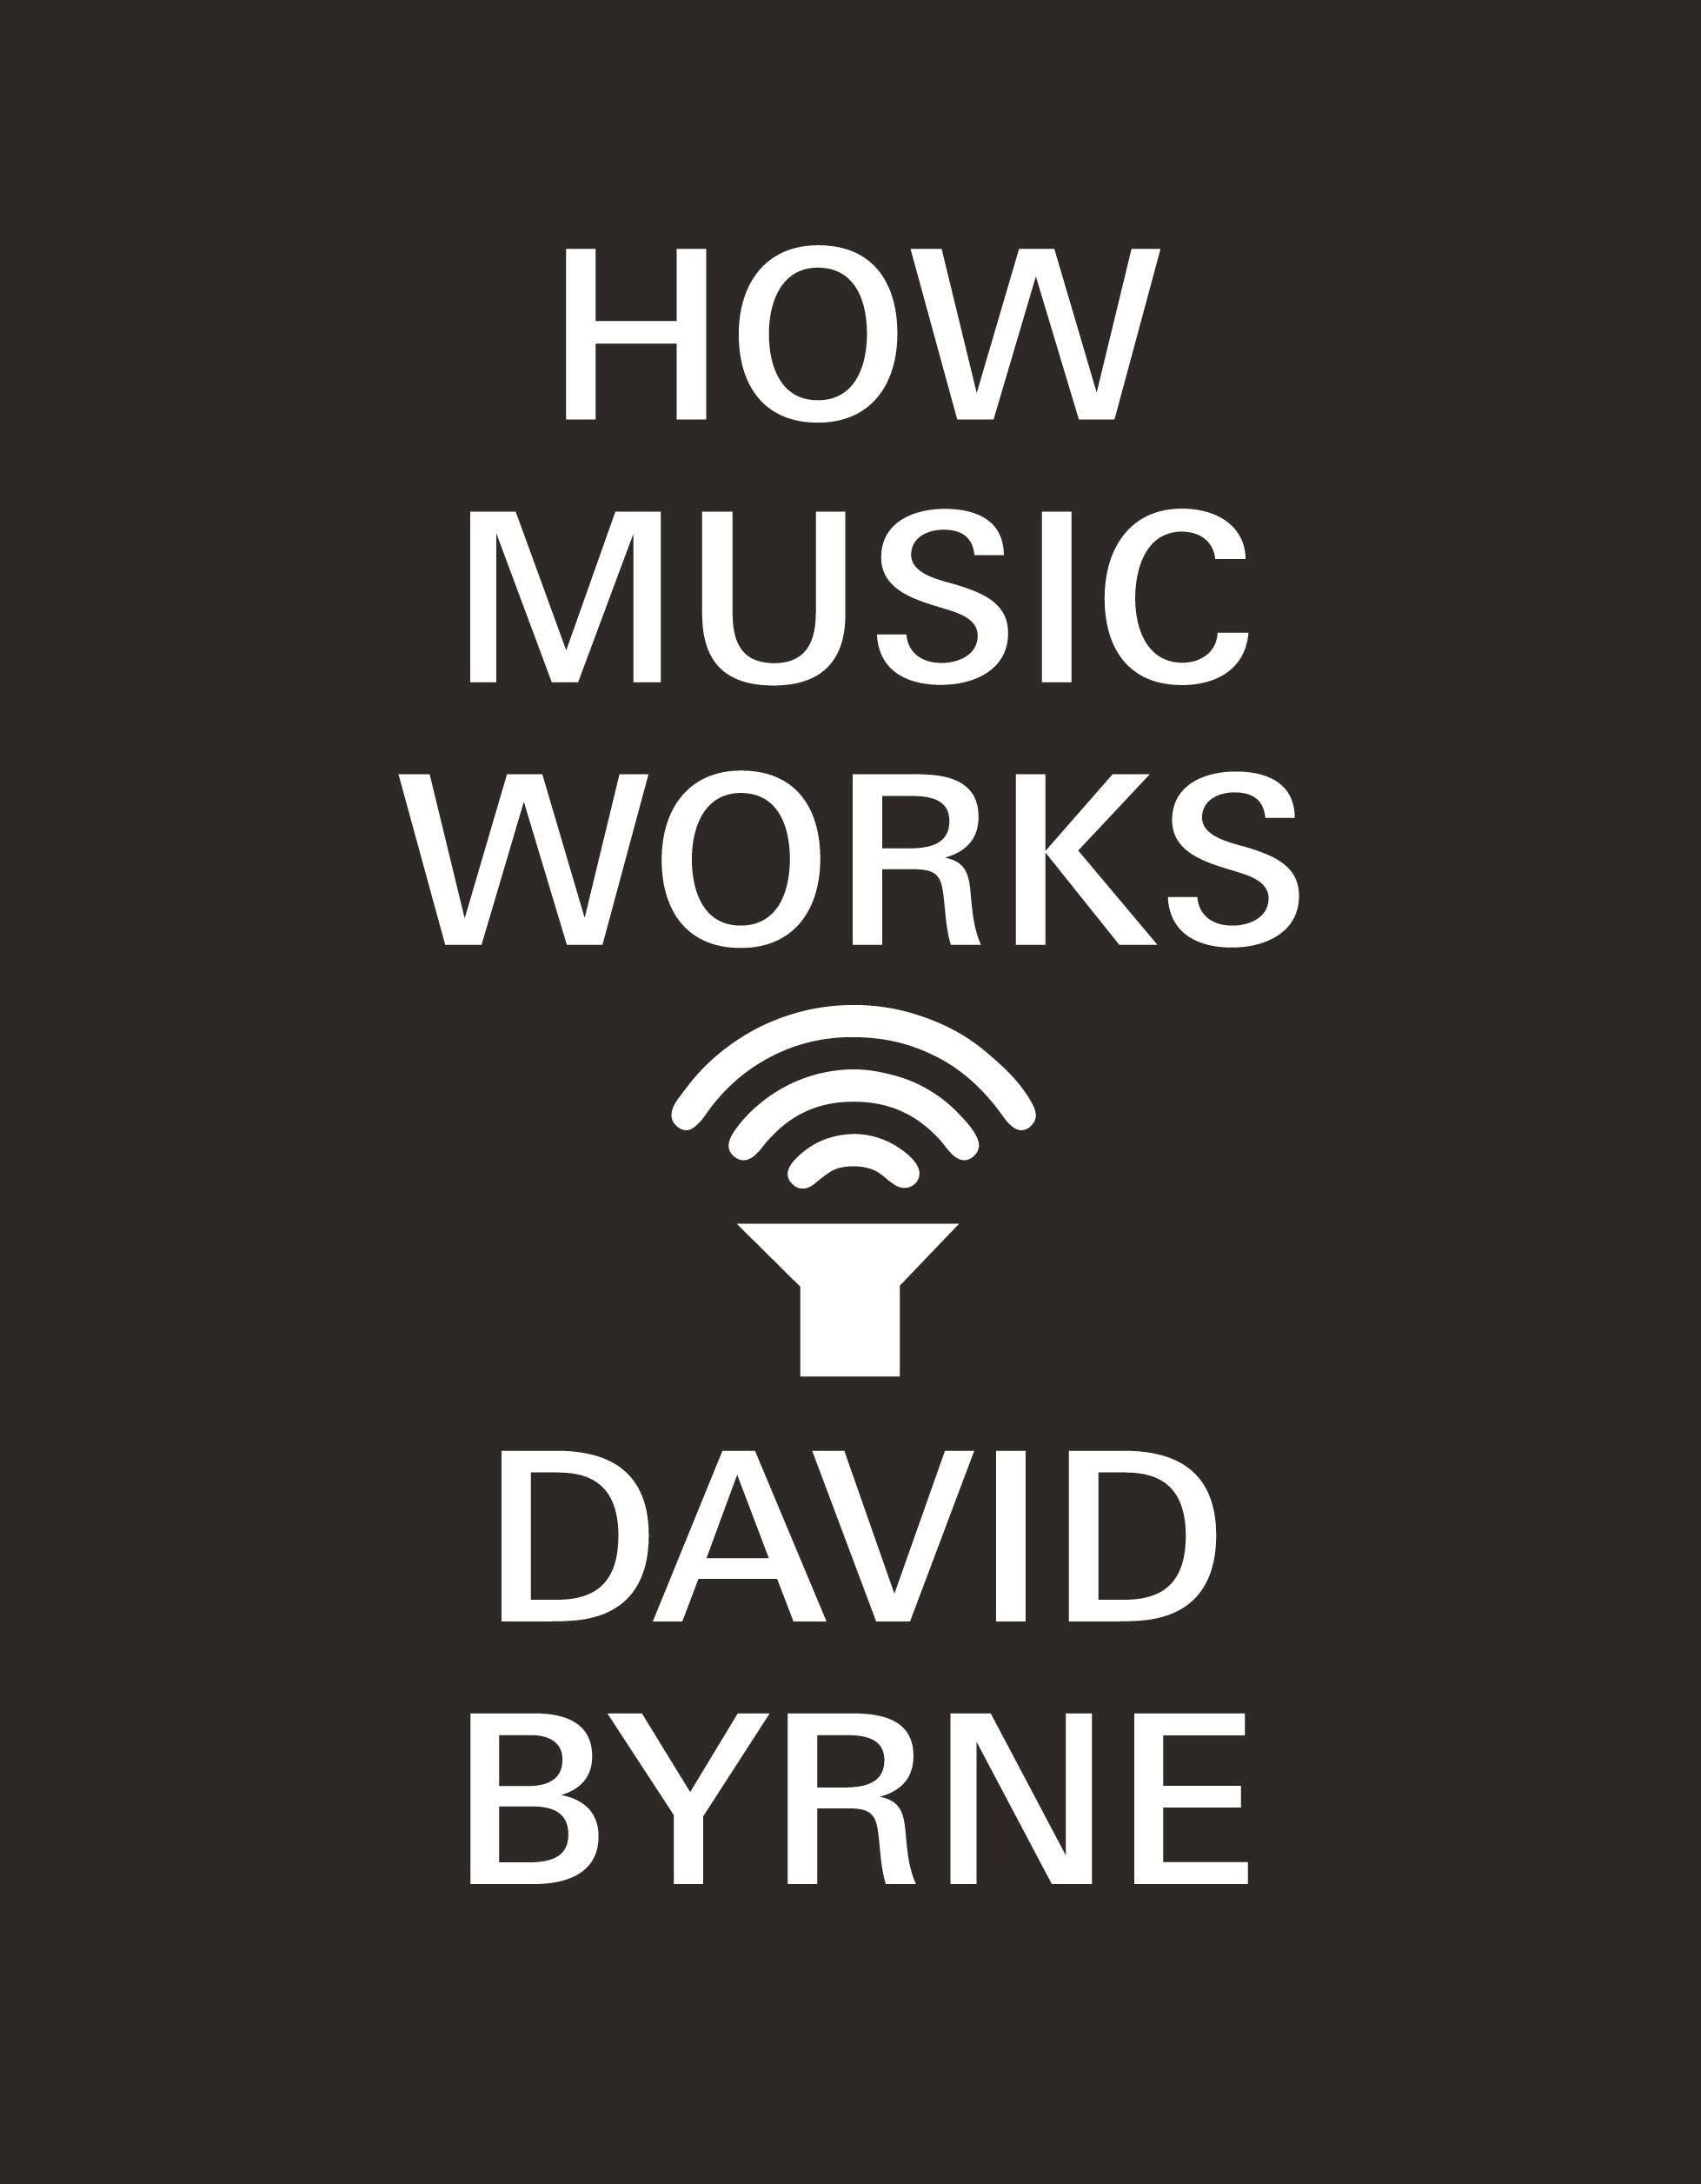 How Music Works - David Byrne